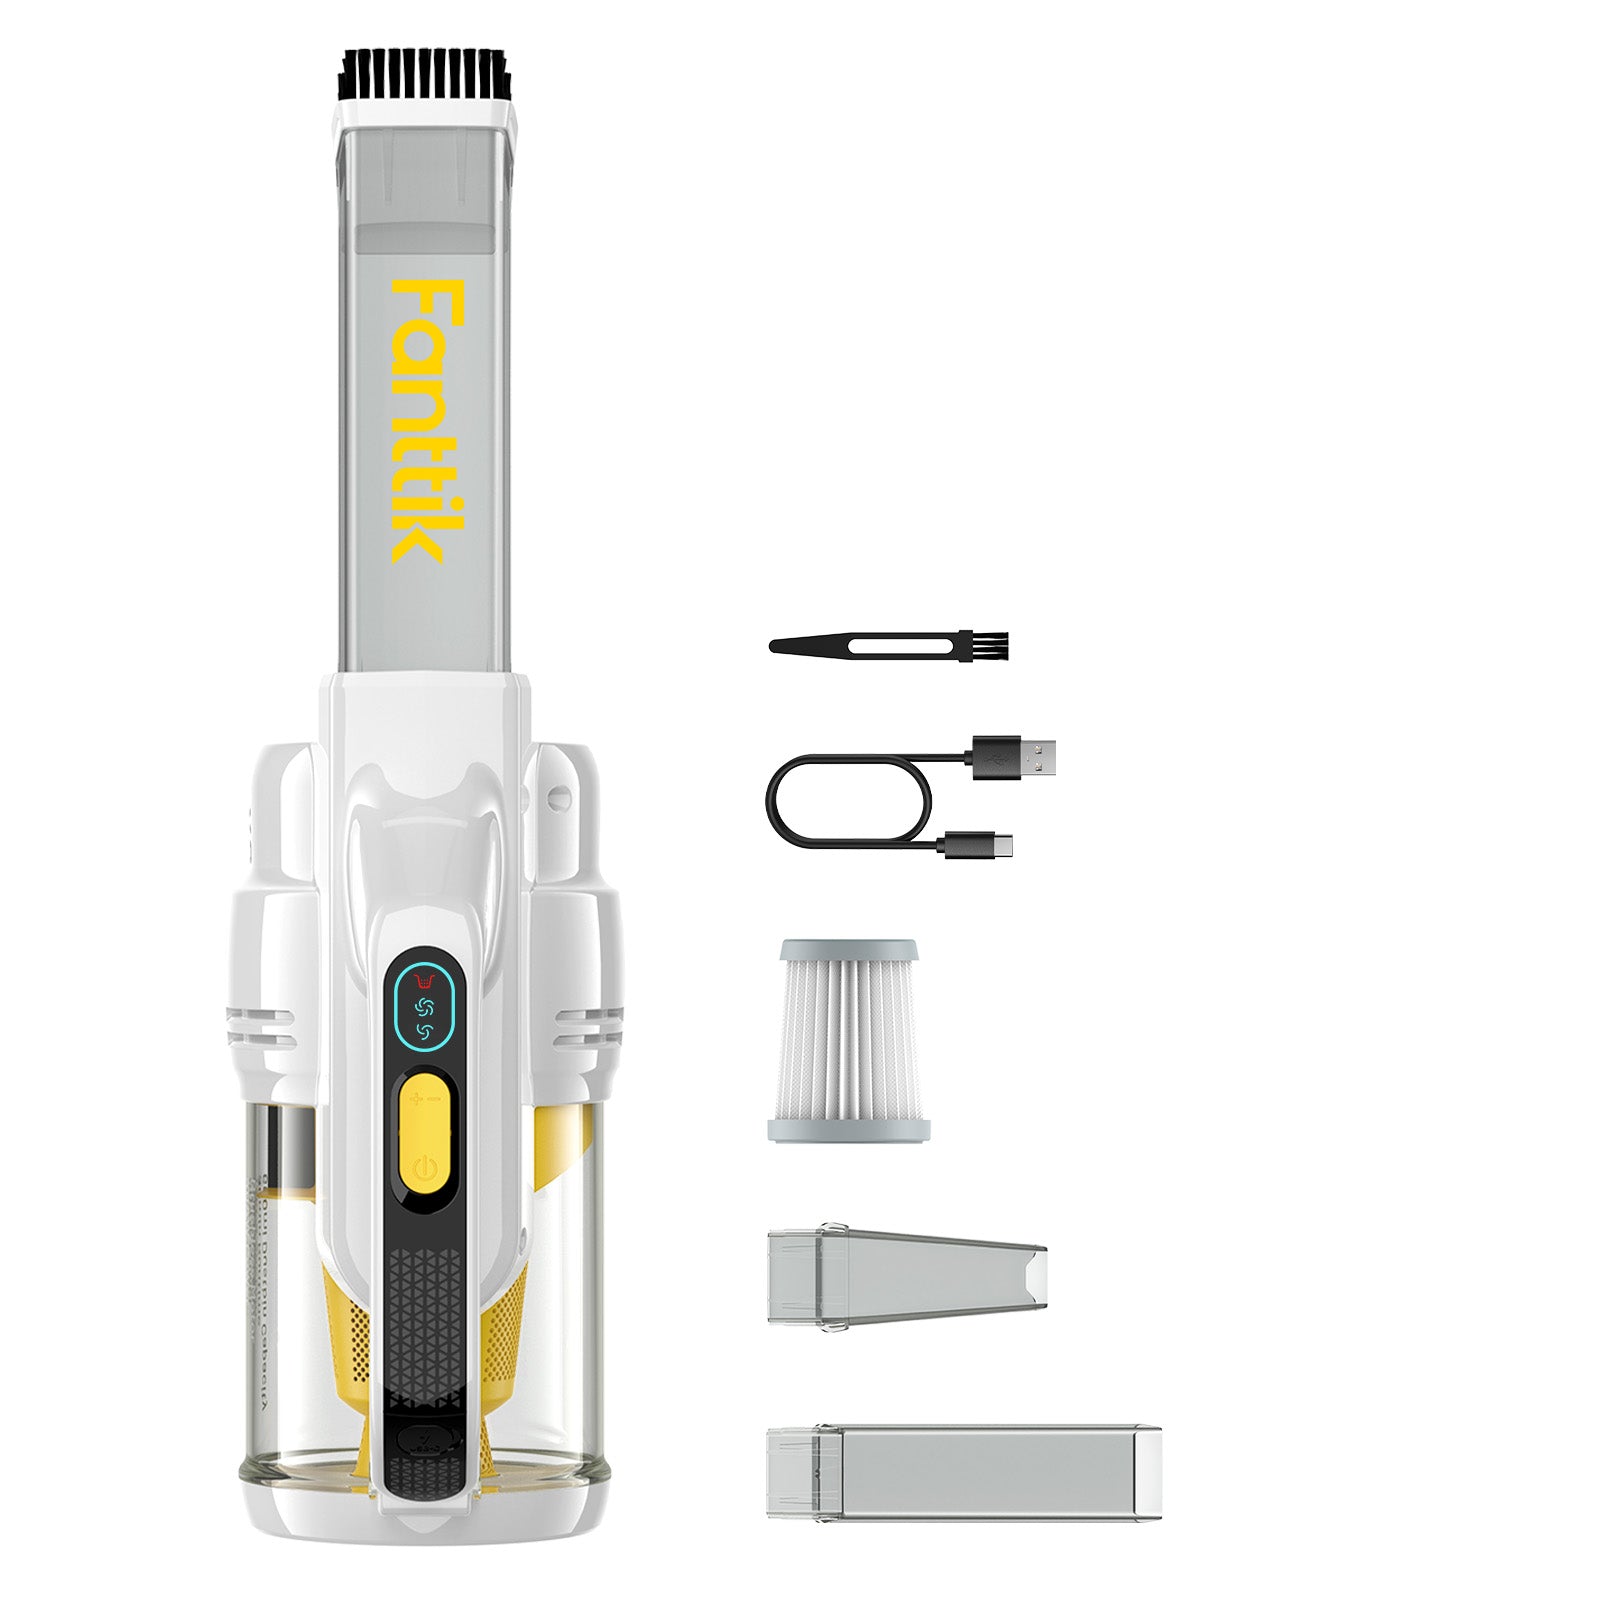 Fanttik V9 Handheld Vacuum Cleaner - Powerful & Portable